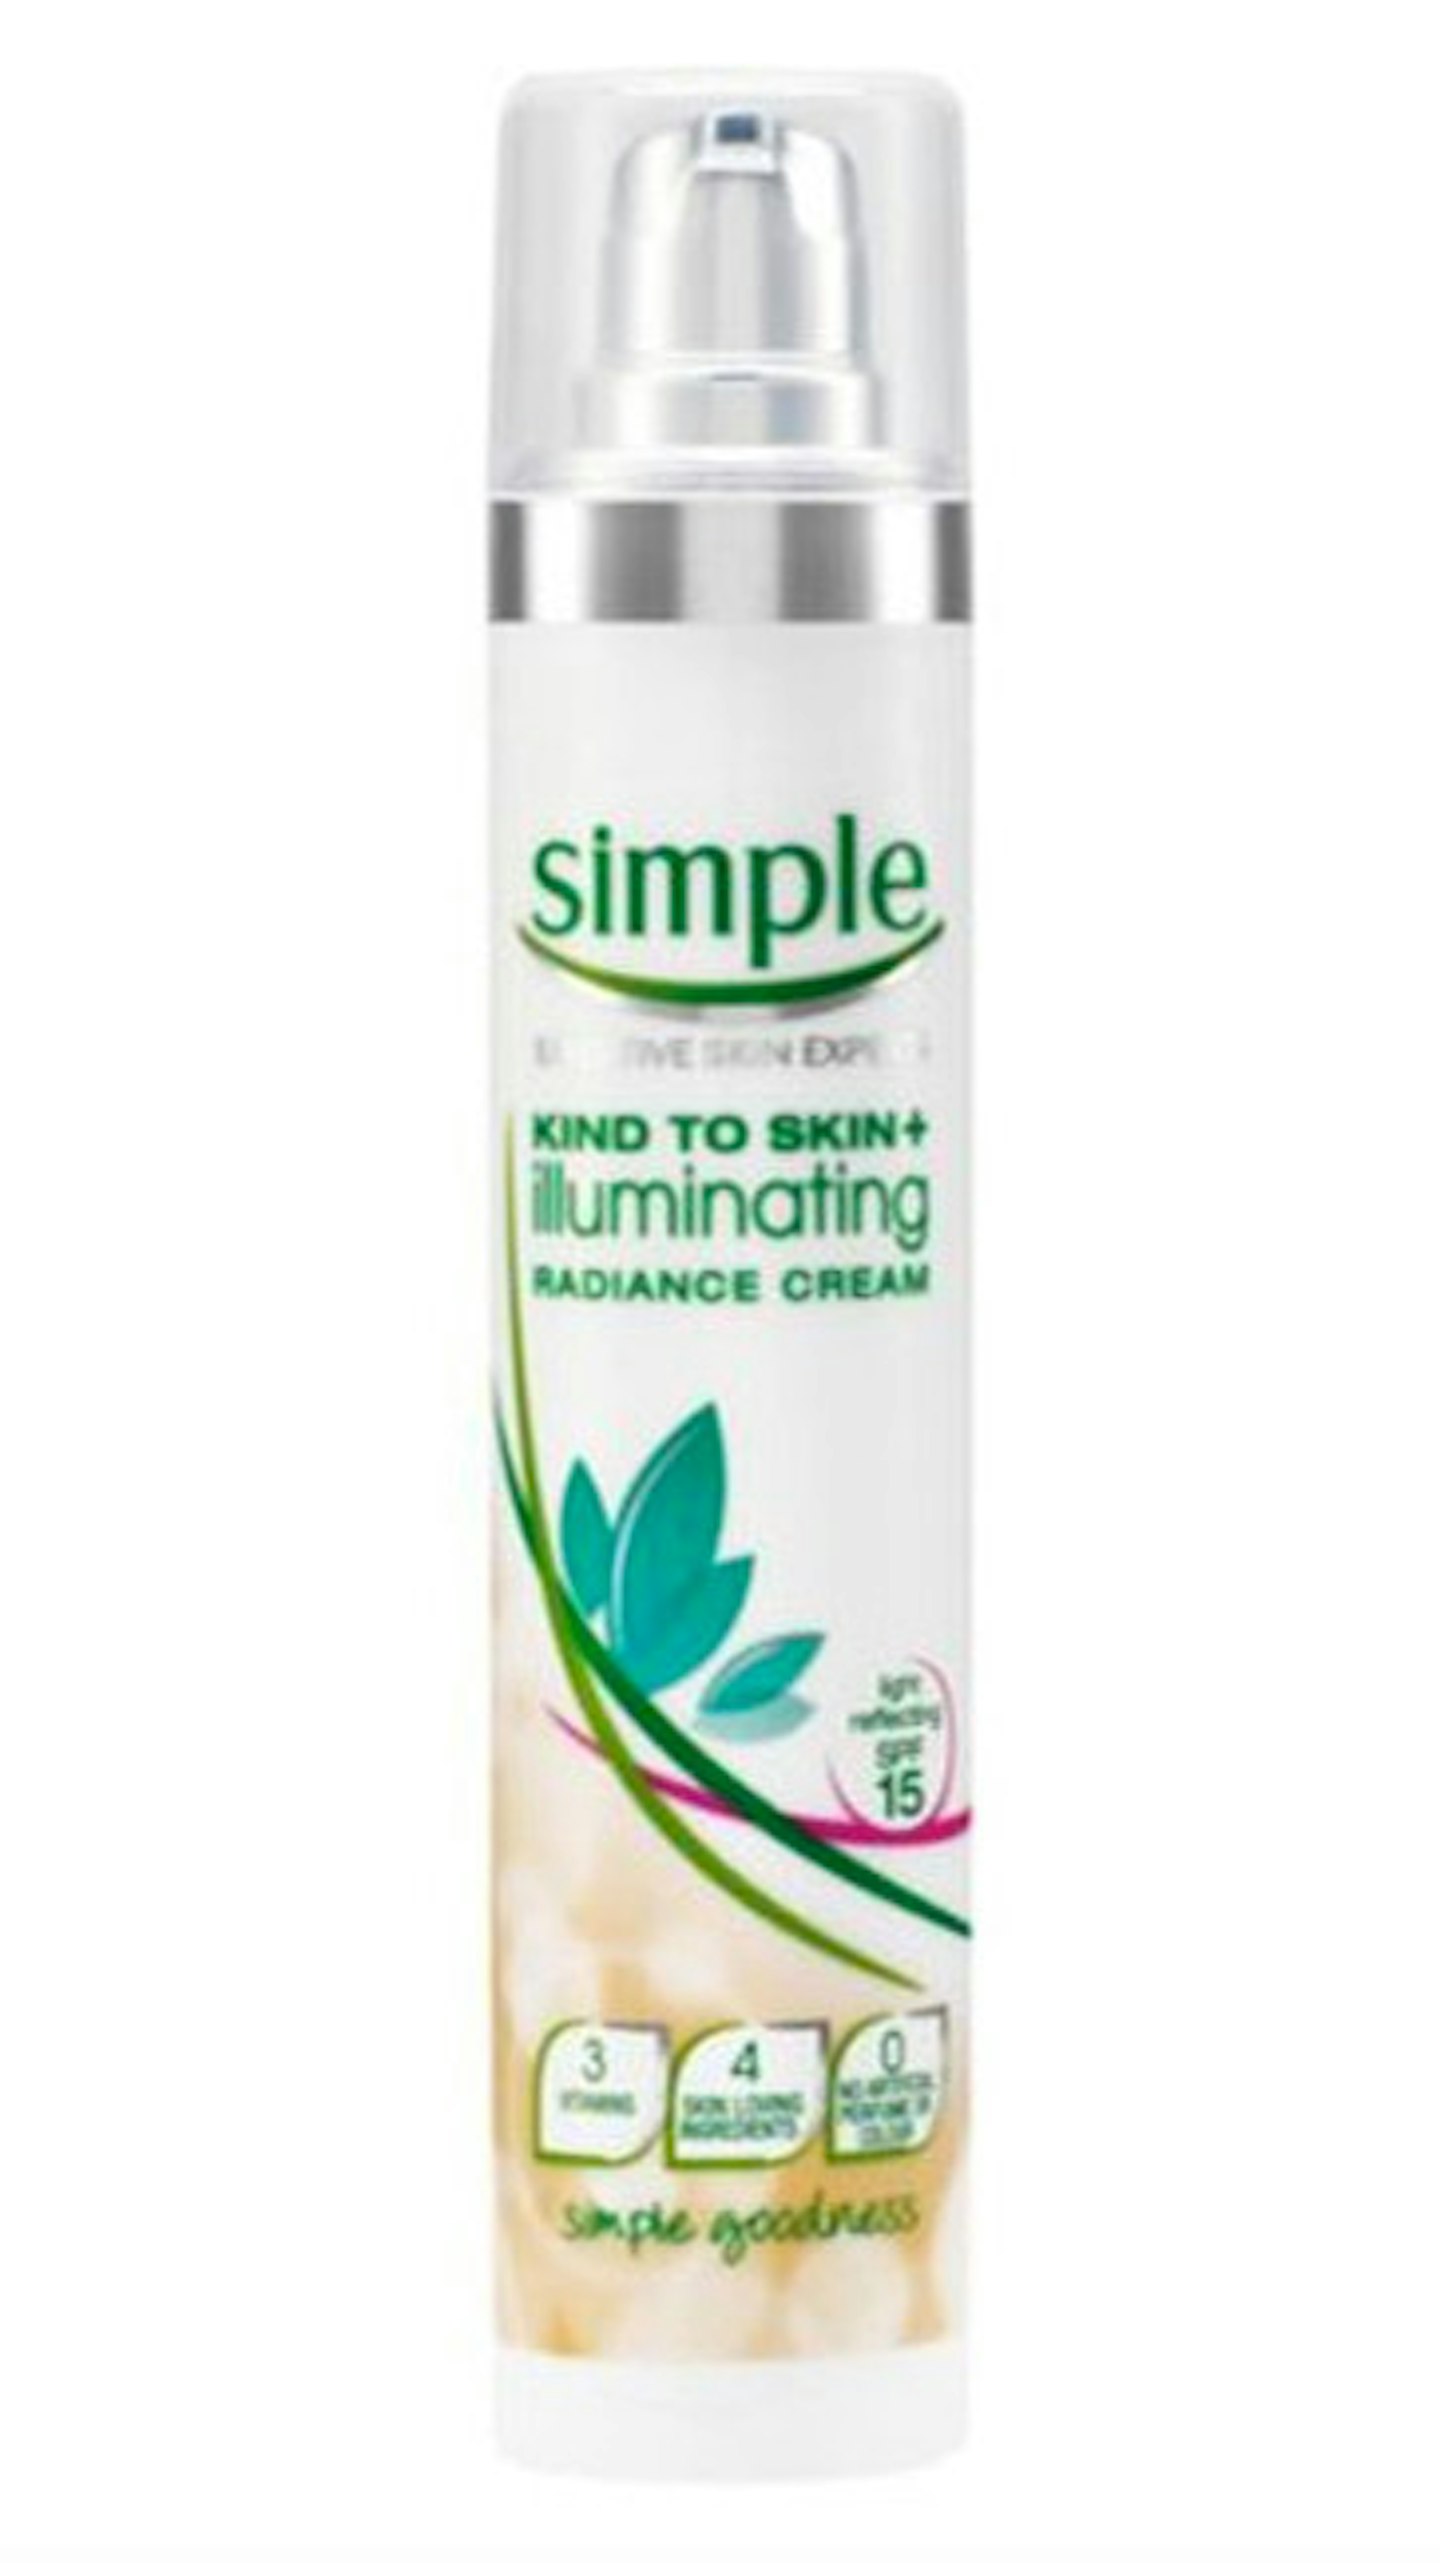 SAVE: Simple Kind to Skin+ Illuminating Radiance Cream &pound;7.99